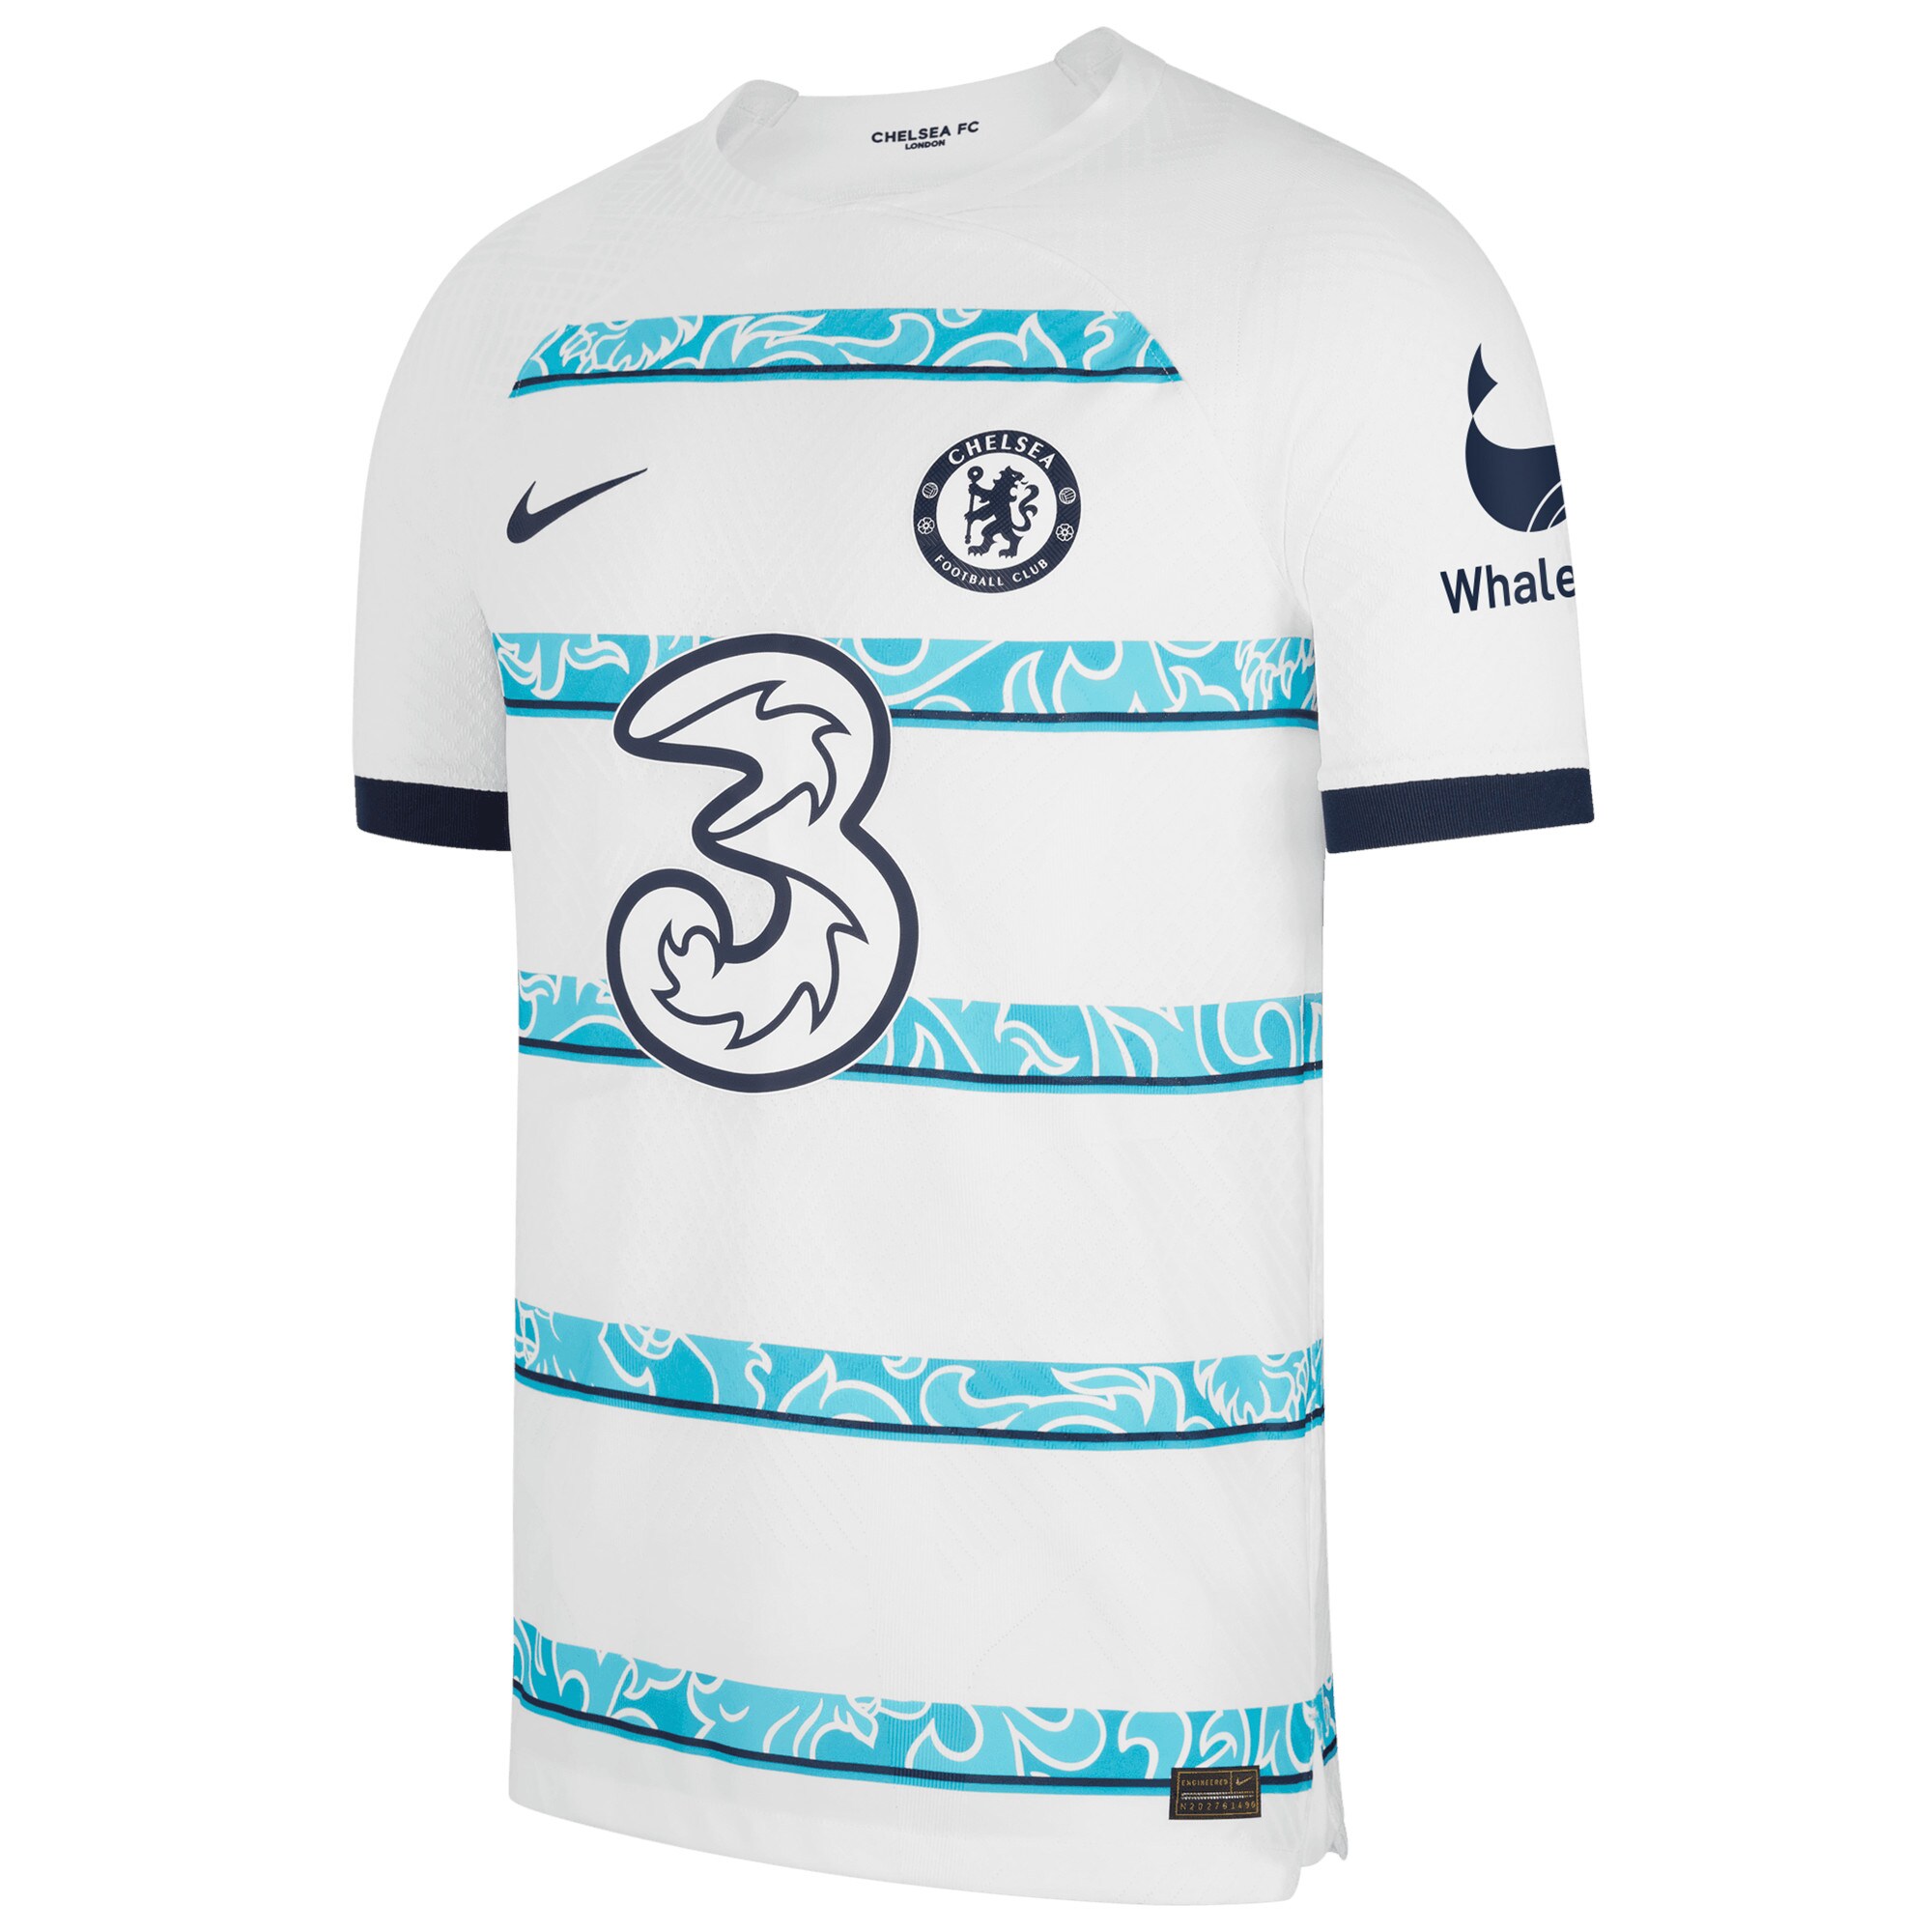 Chelsea WSL Away Vapor Match Shirt 2022-23 with Wardlaw 34 printing